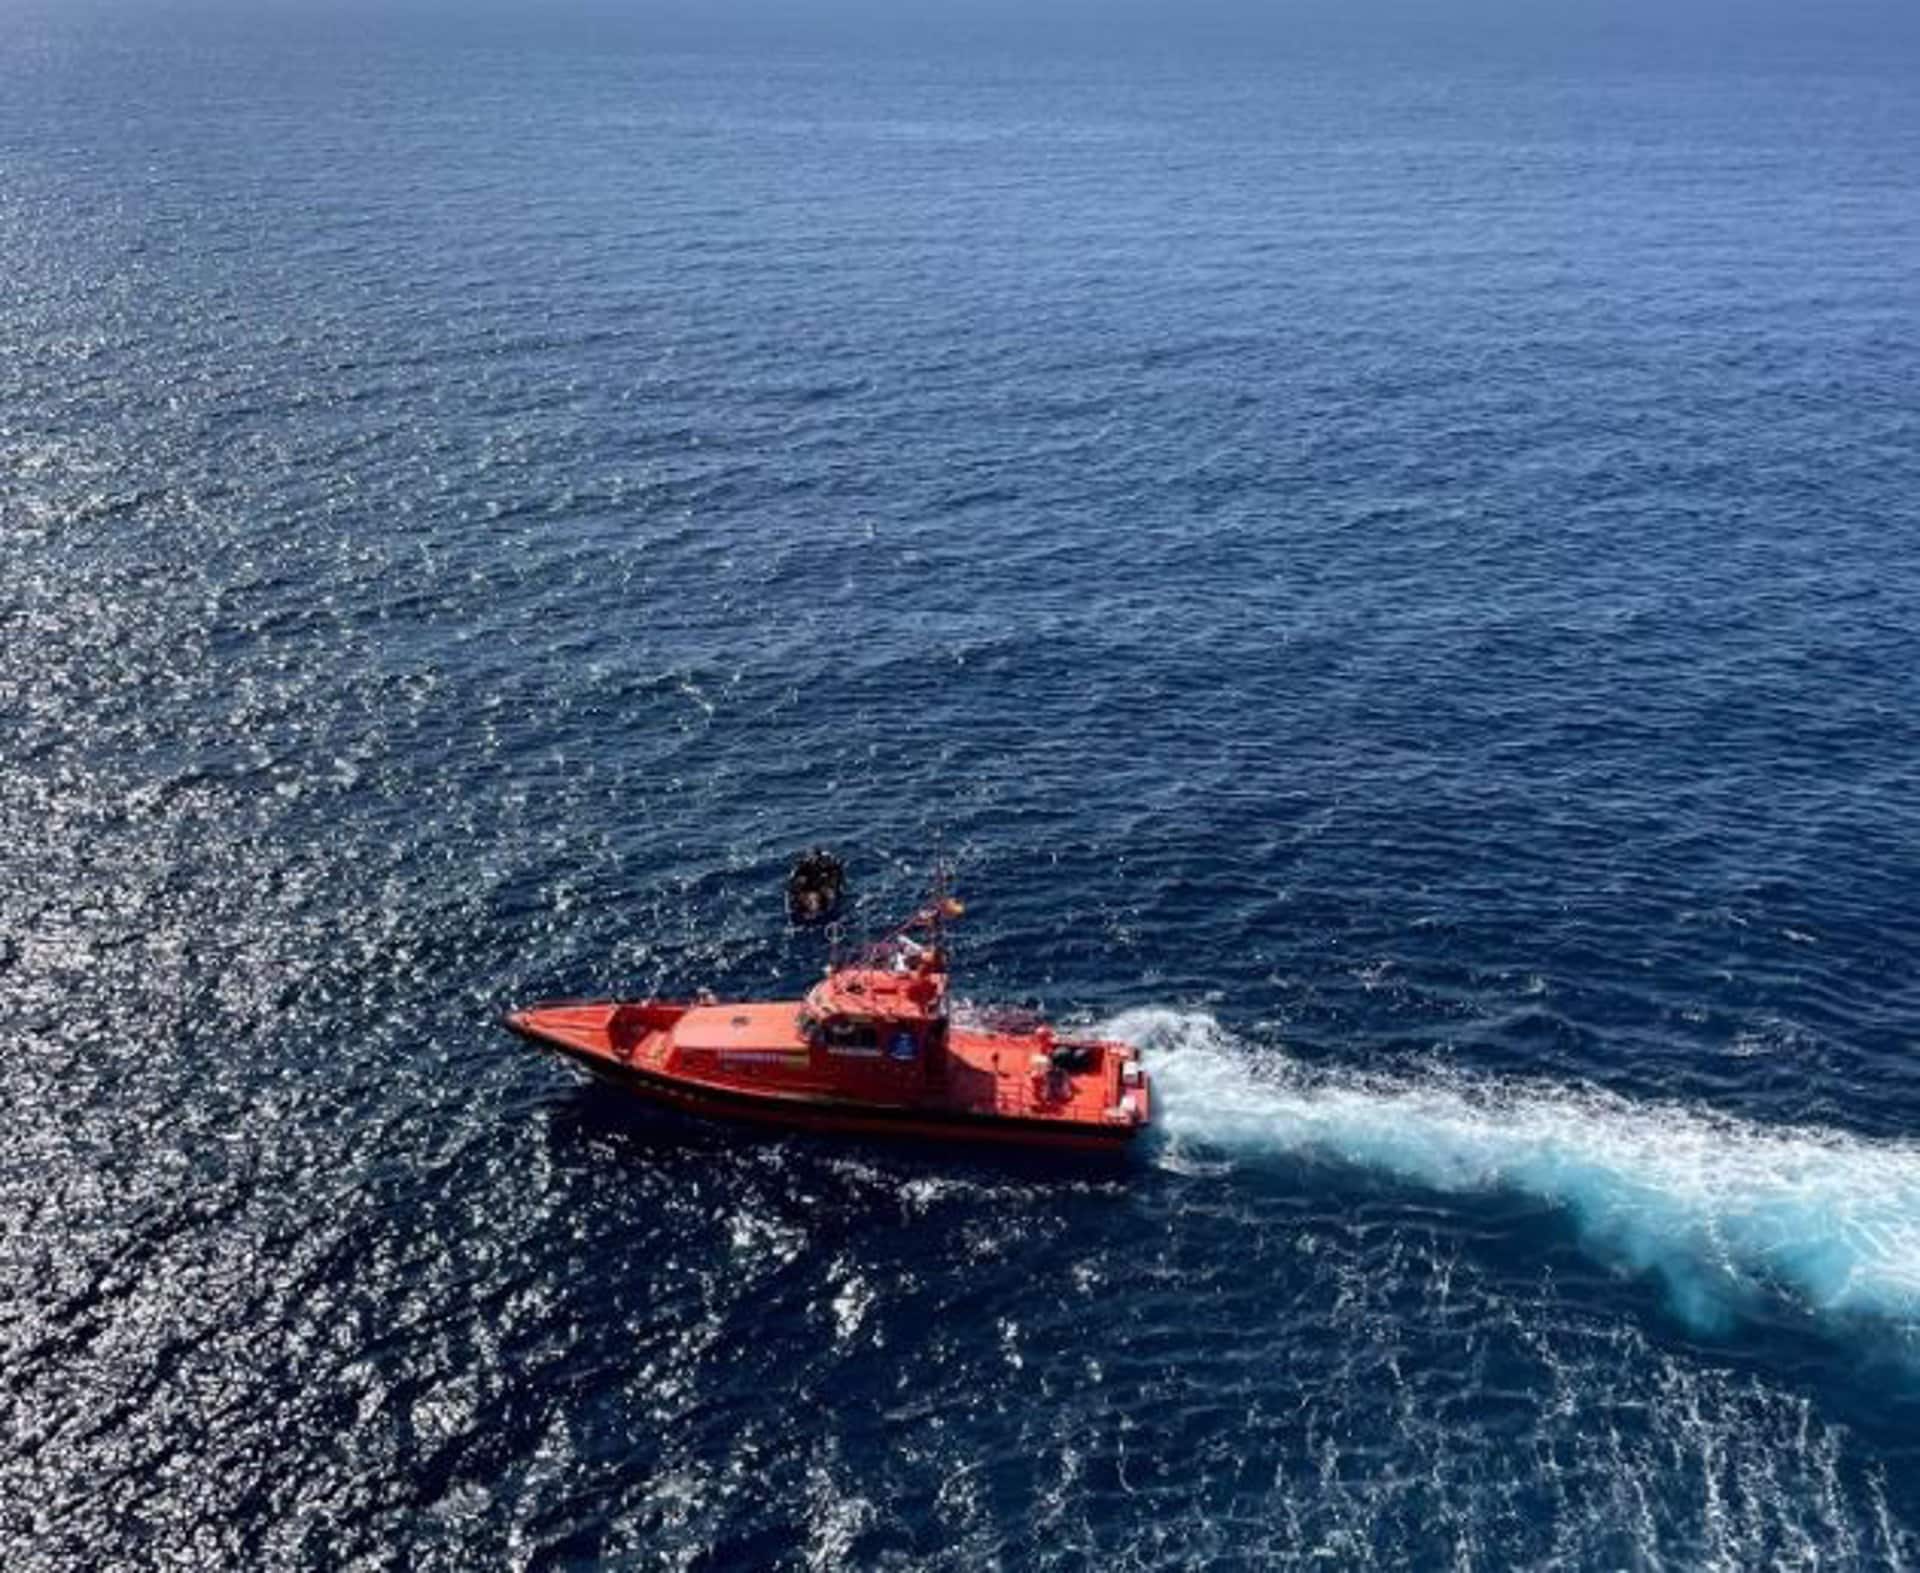 Interceptada una patera cerca de la costa de Calpe con 13 personas a bordo